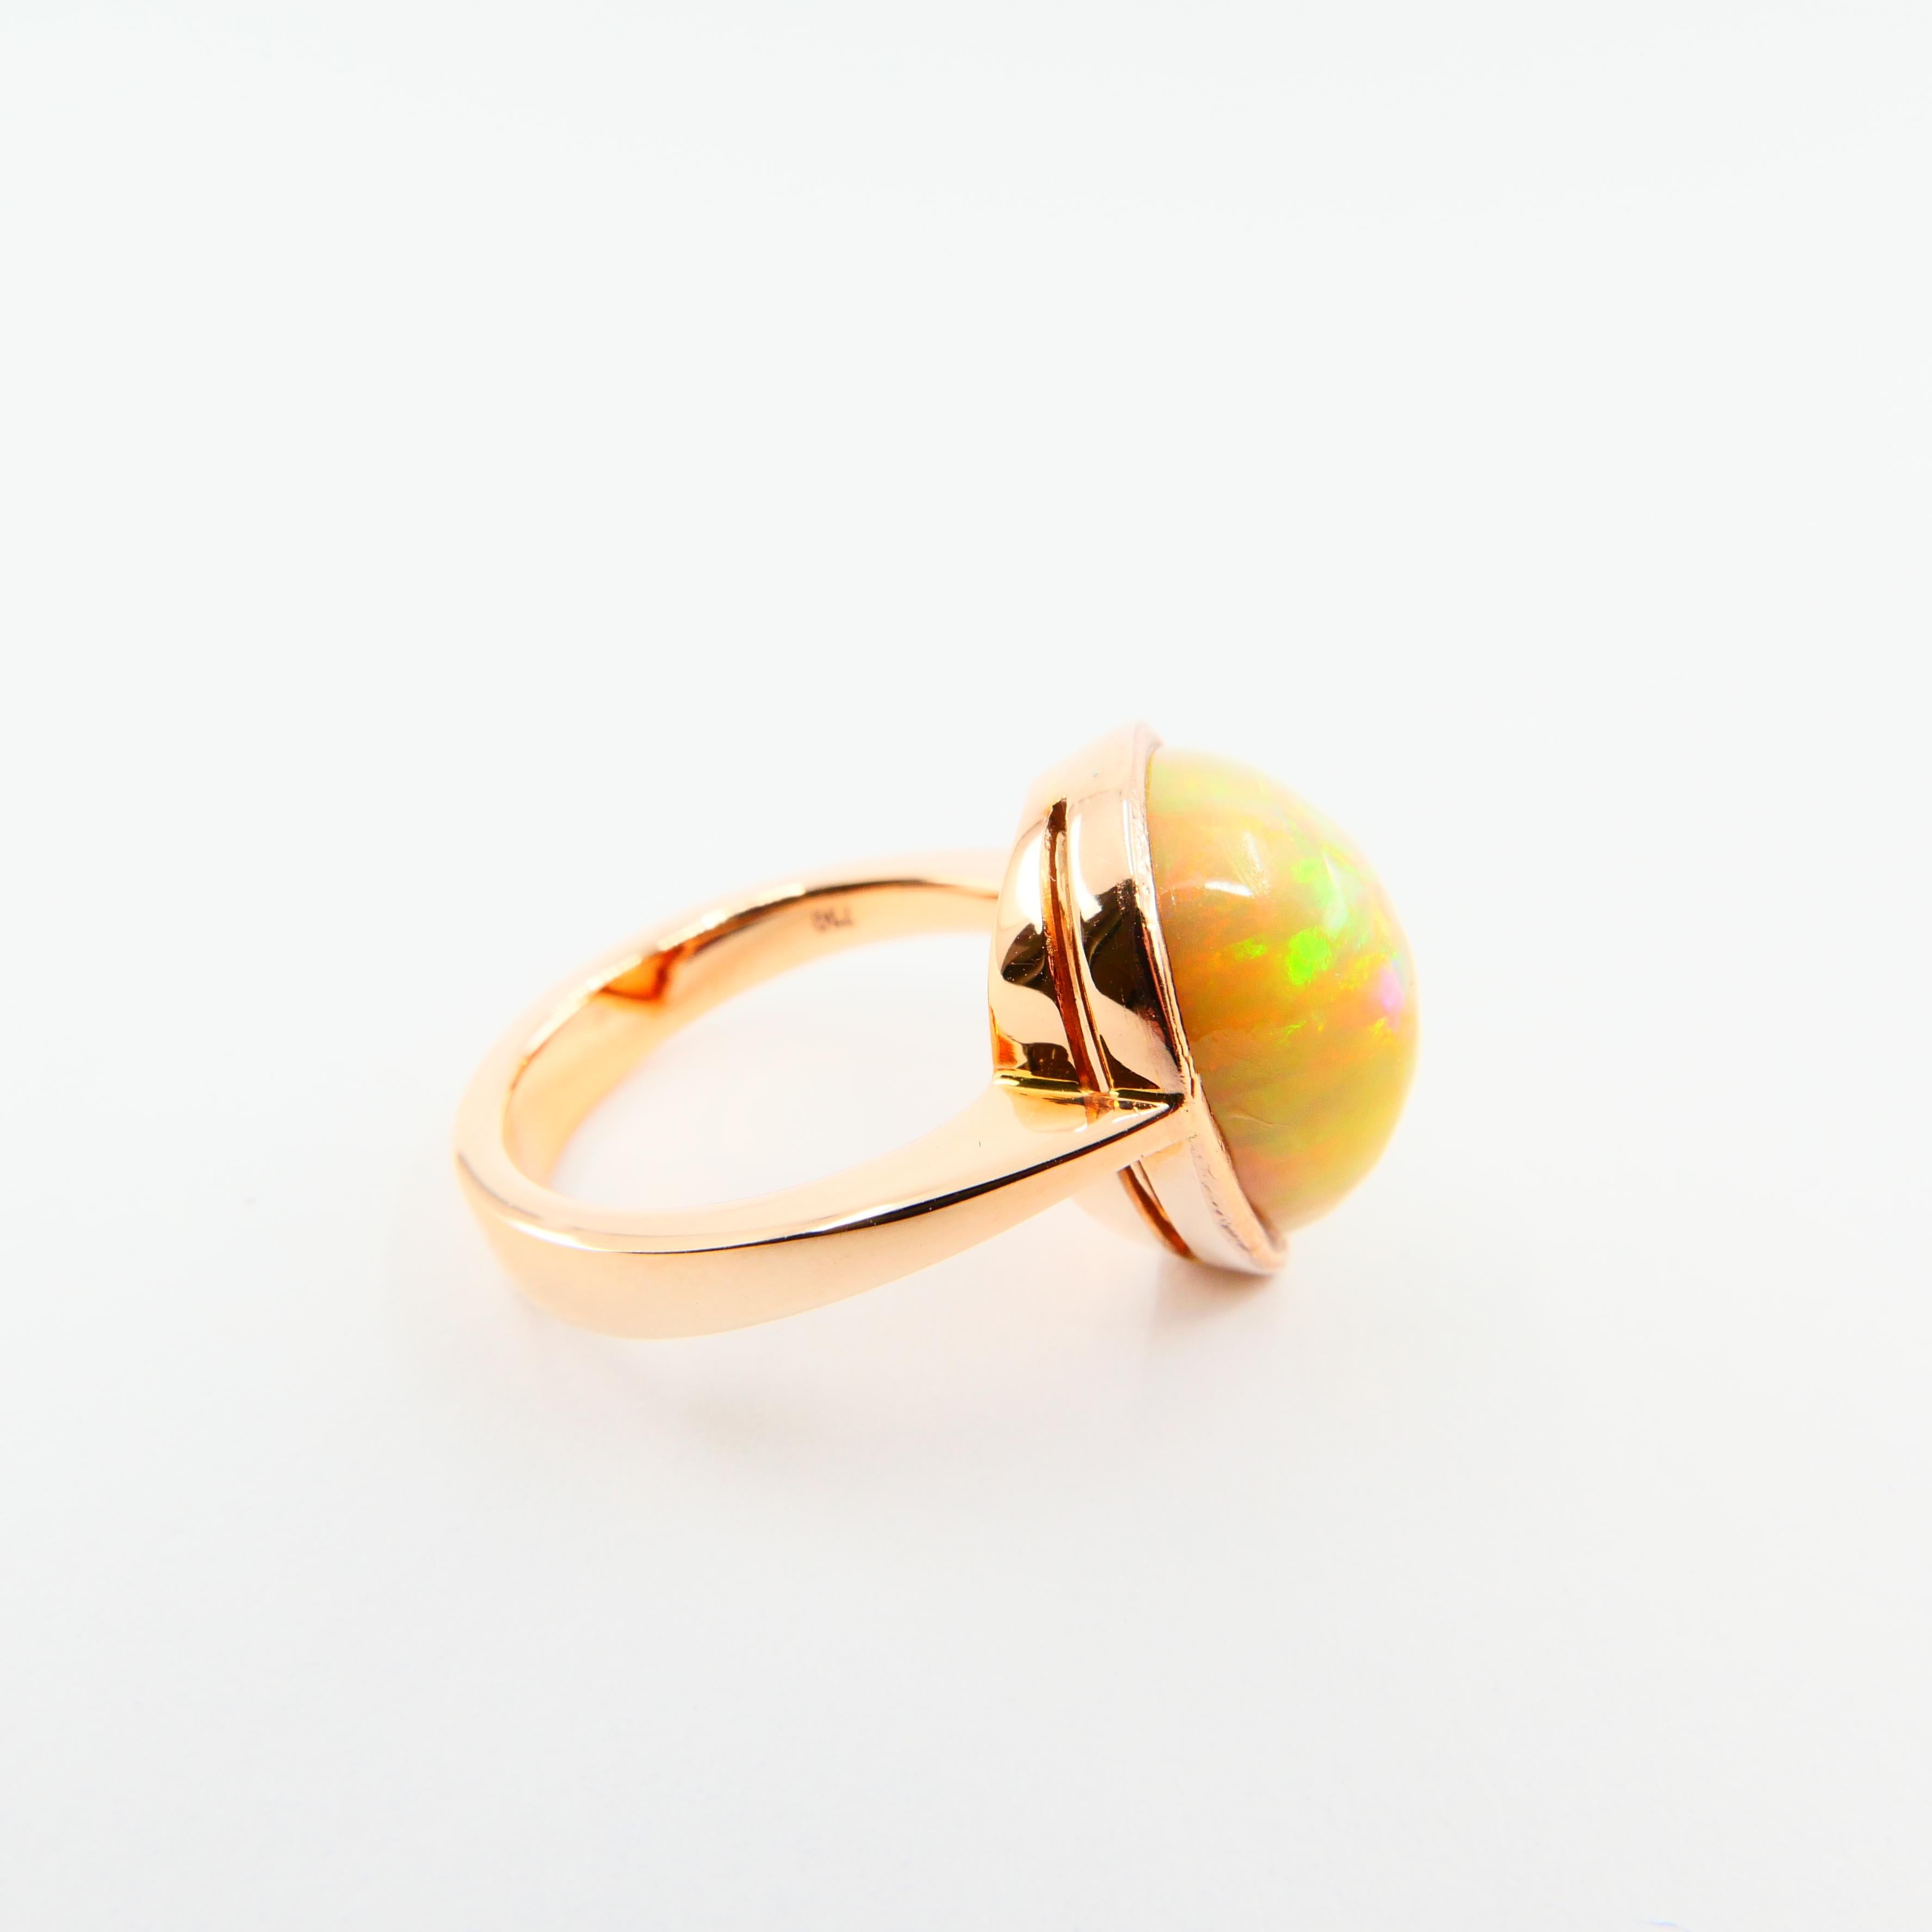 5.85 Carat Opal Ring Set in 18 Karat Gold Colorful Red, Green, Orange and Yellow 4